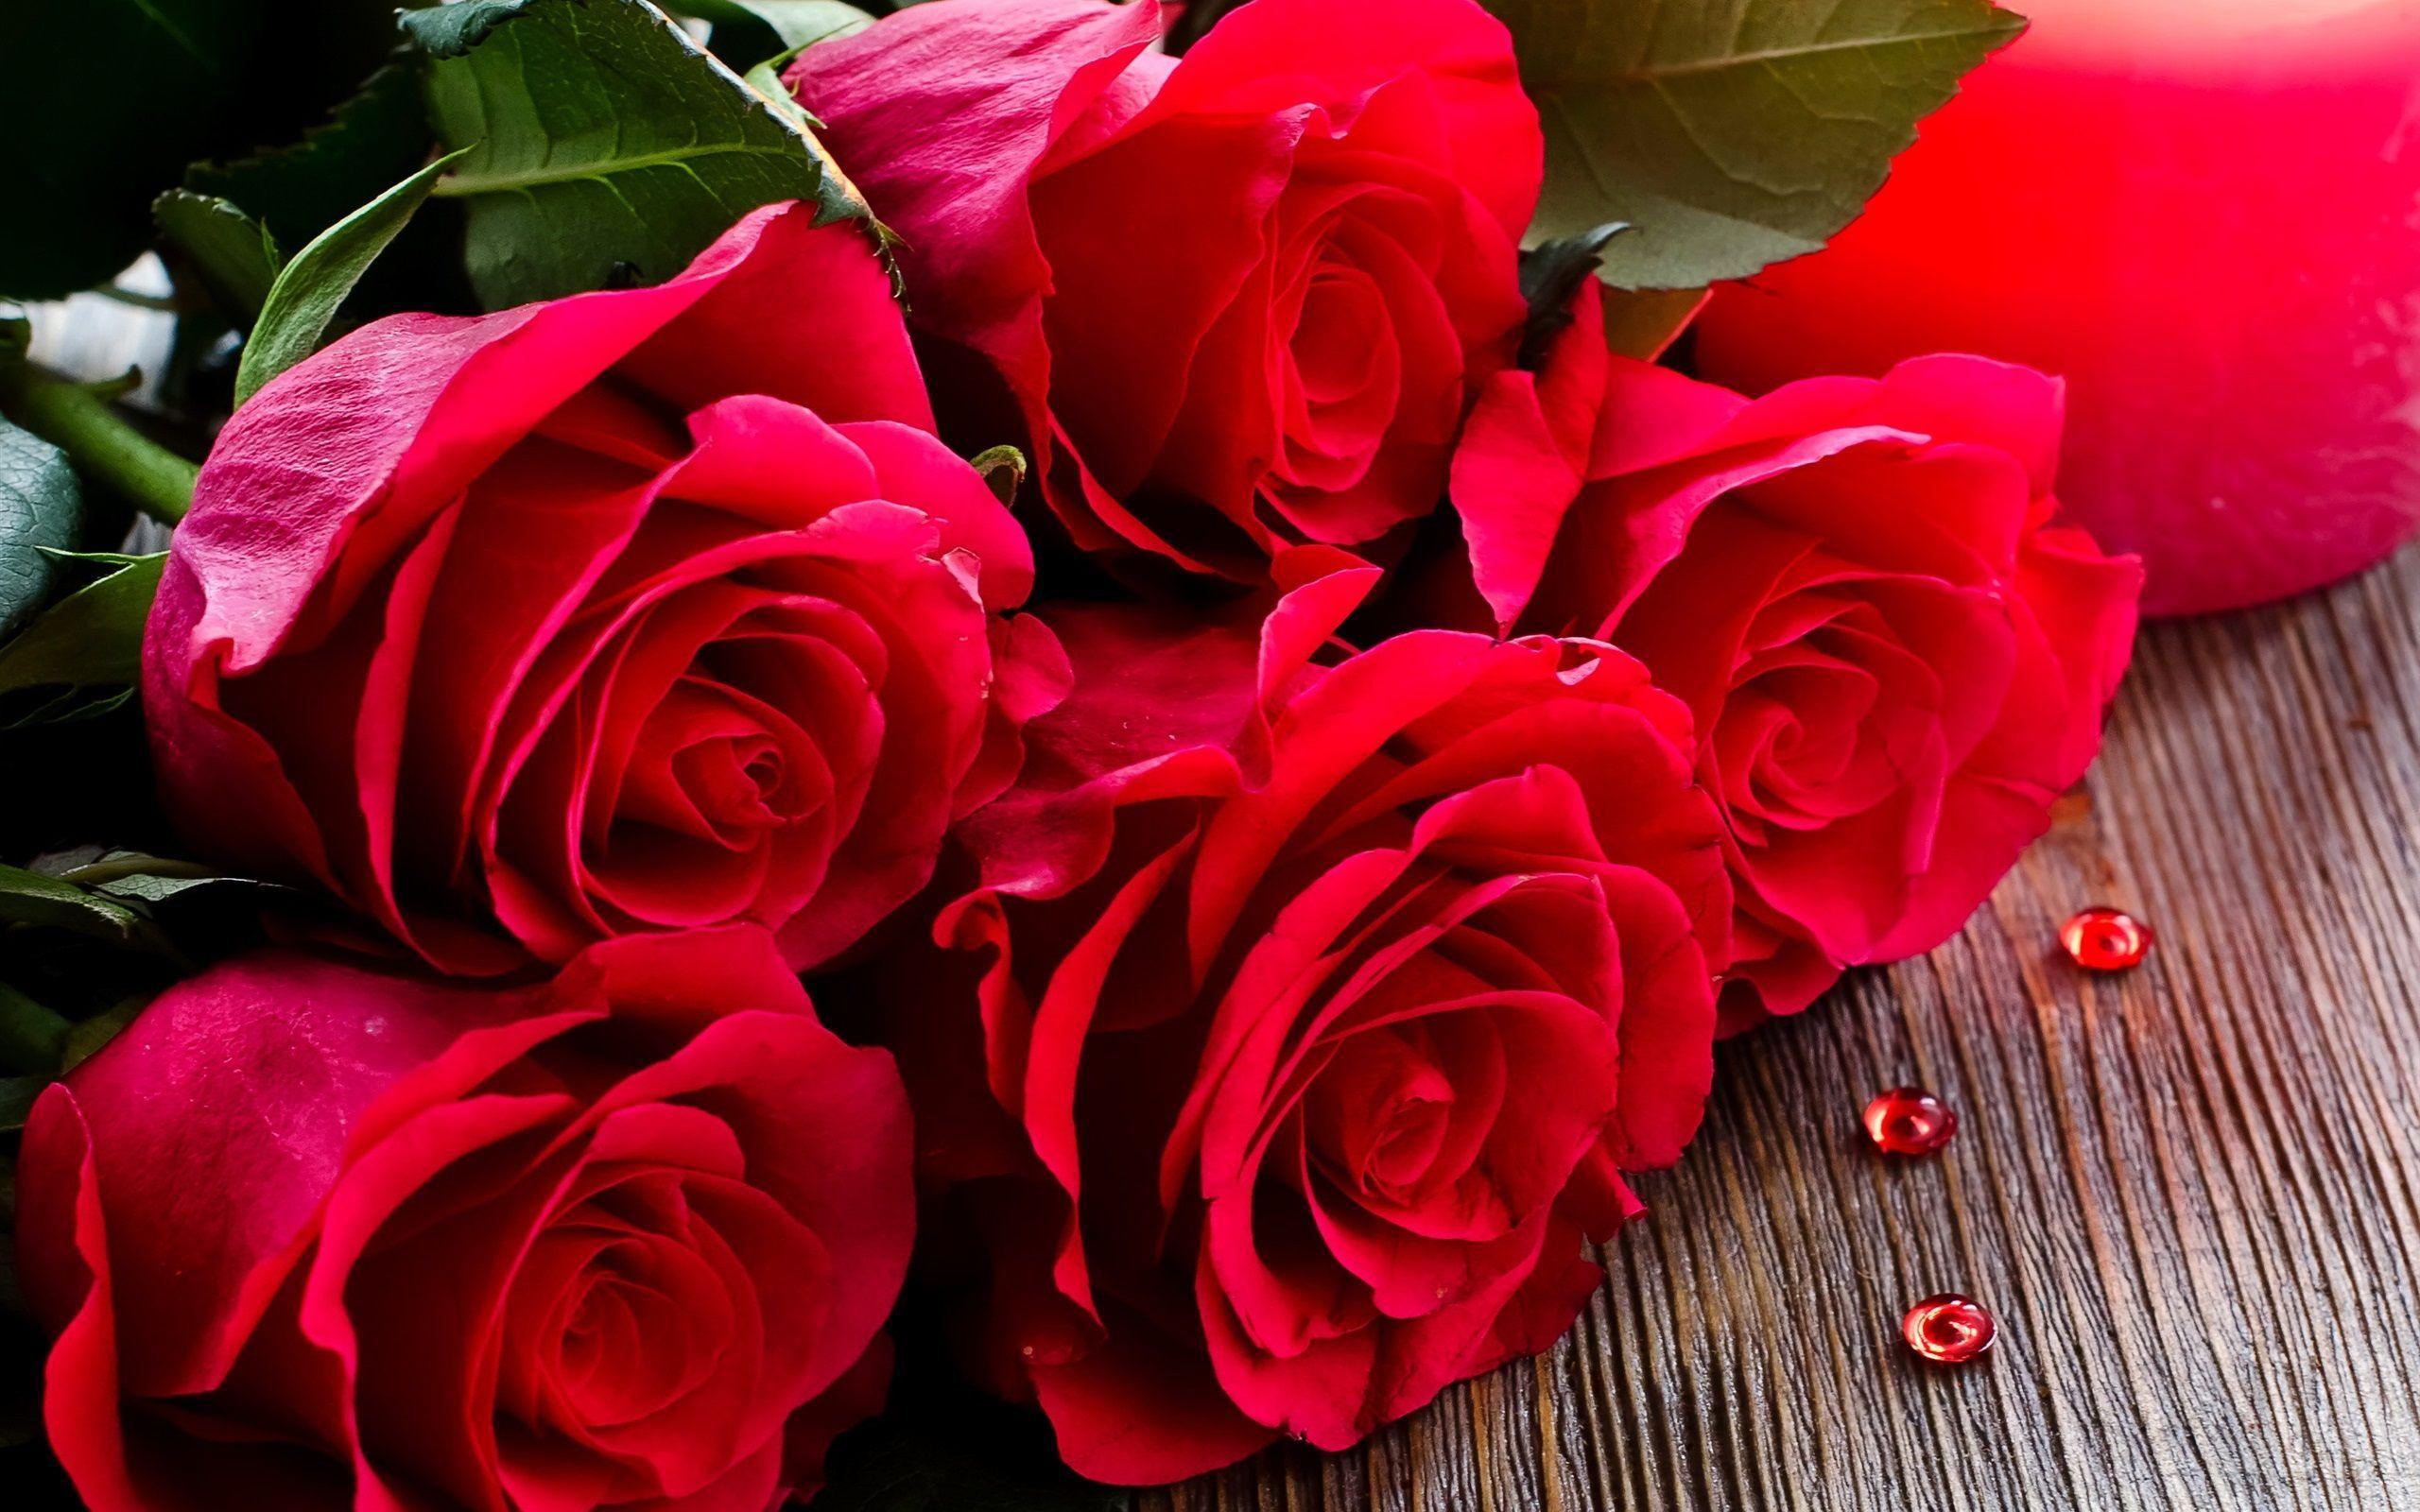 Red Rose Full HD Wallpaper Photo Pics For Mobile Phones Roses